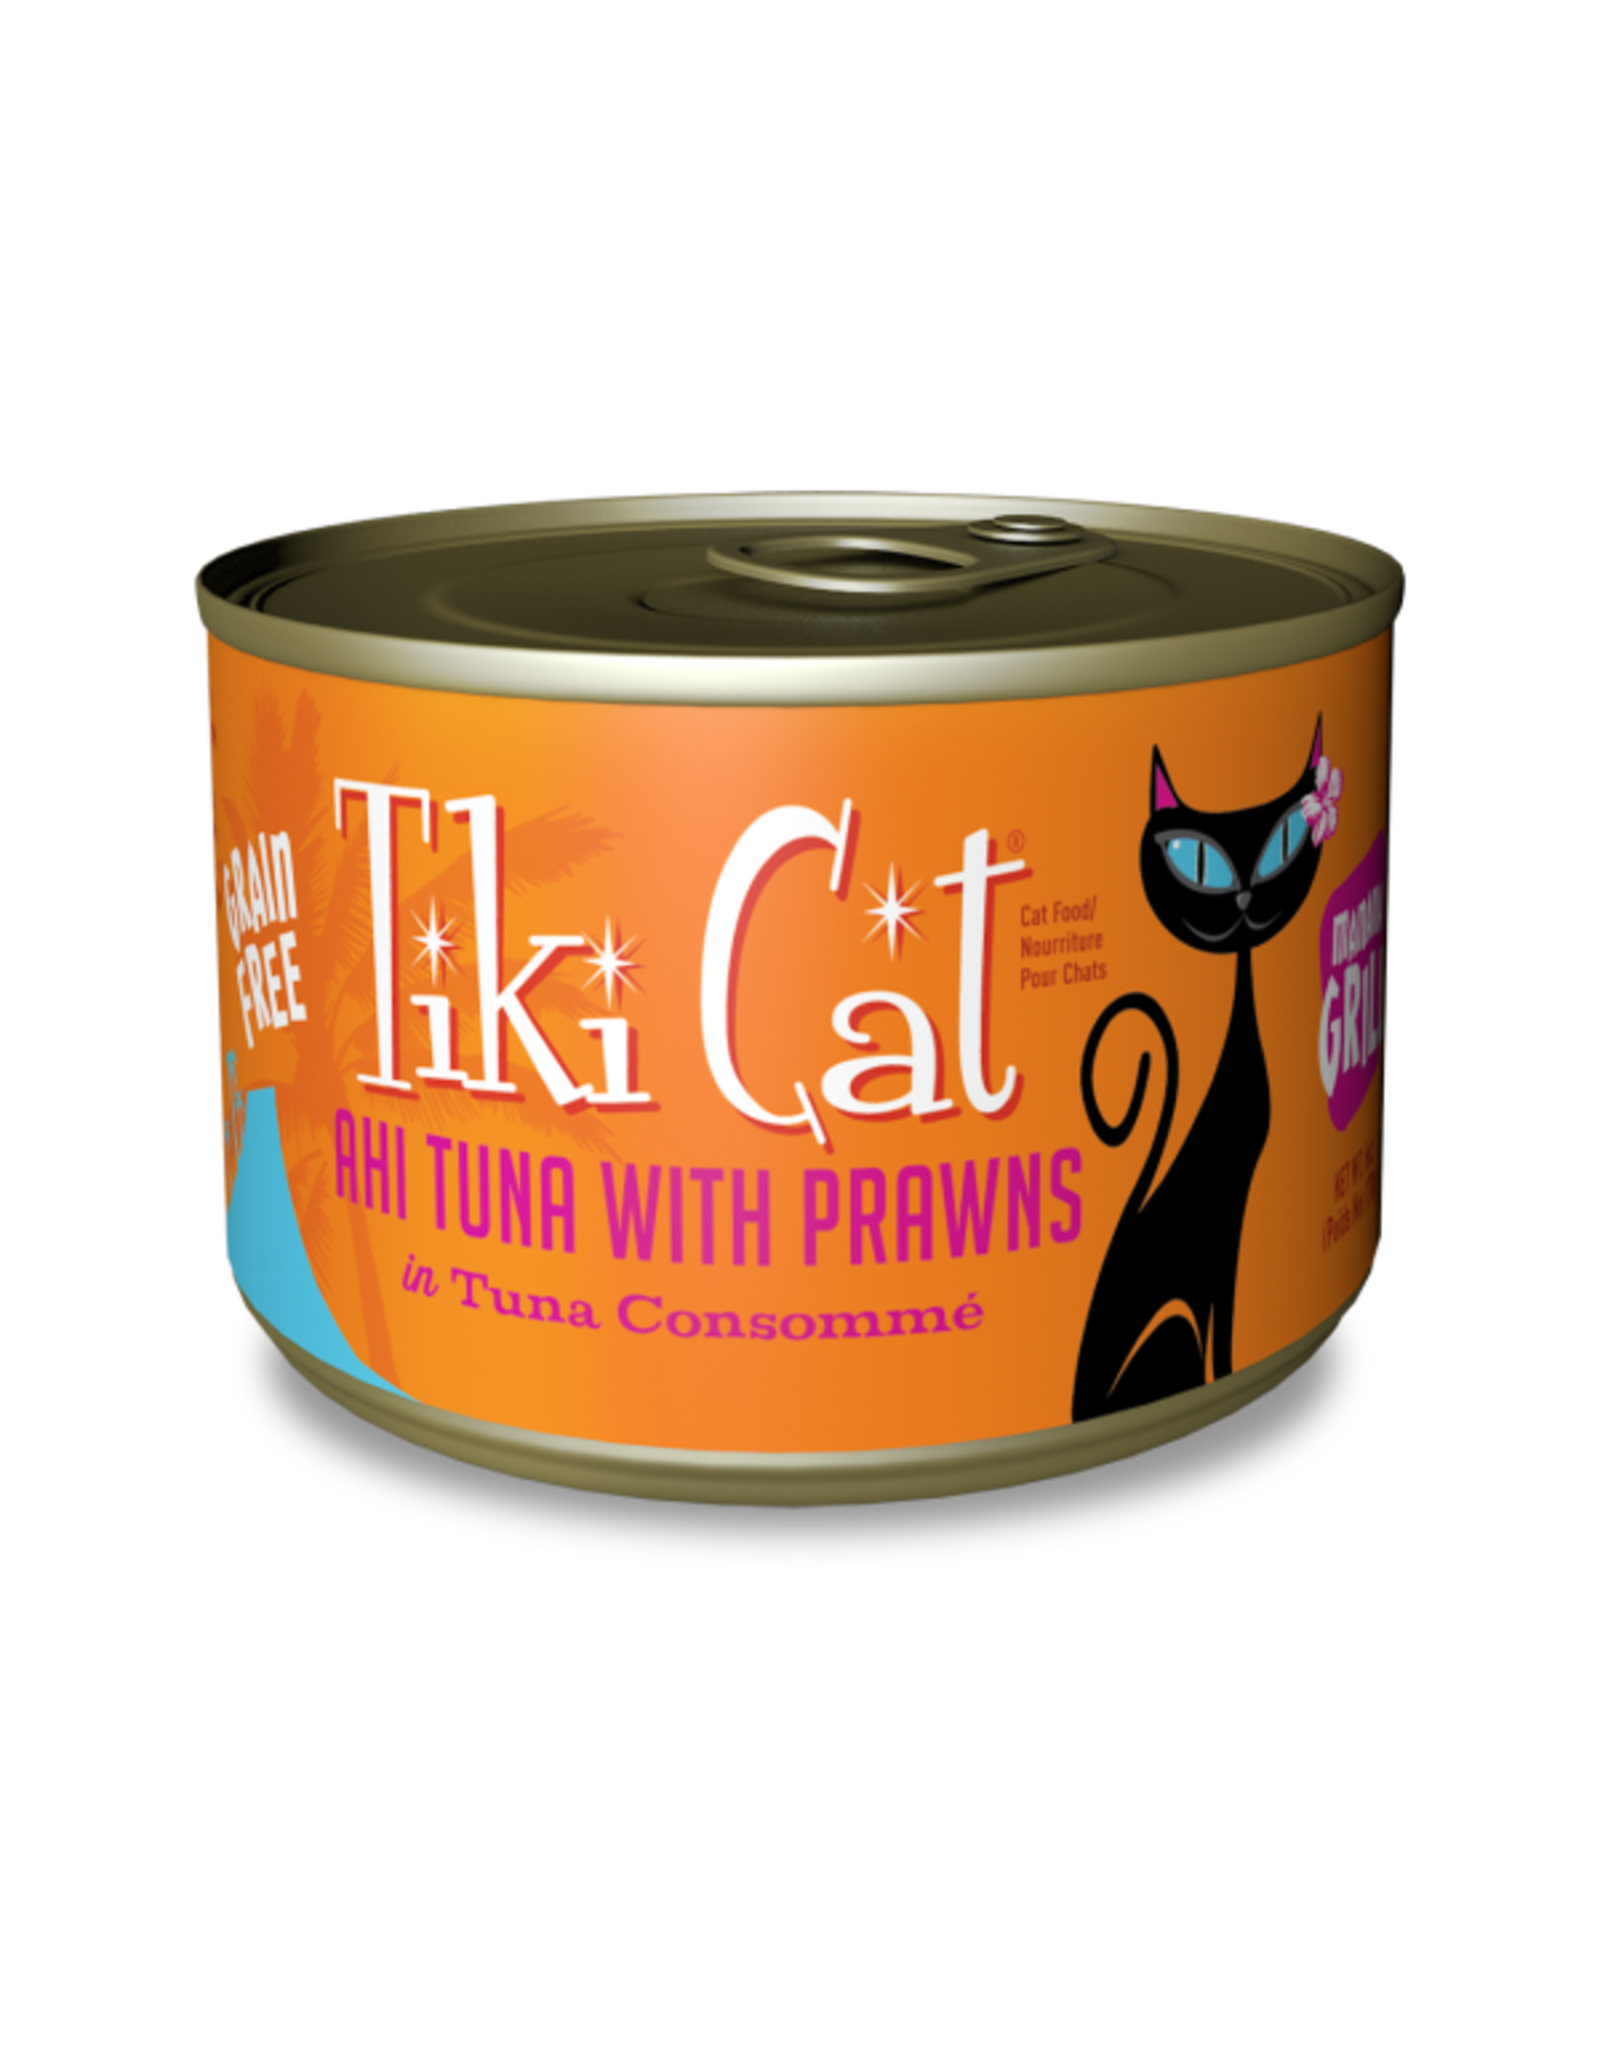 TikiCat Hawaiian Grill GF Manana Ahi Tuna/Prawns 6 oz